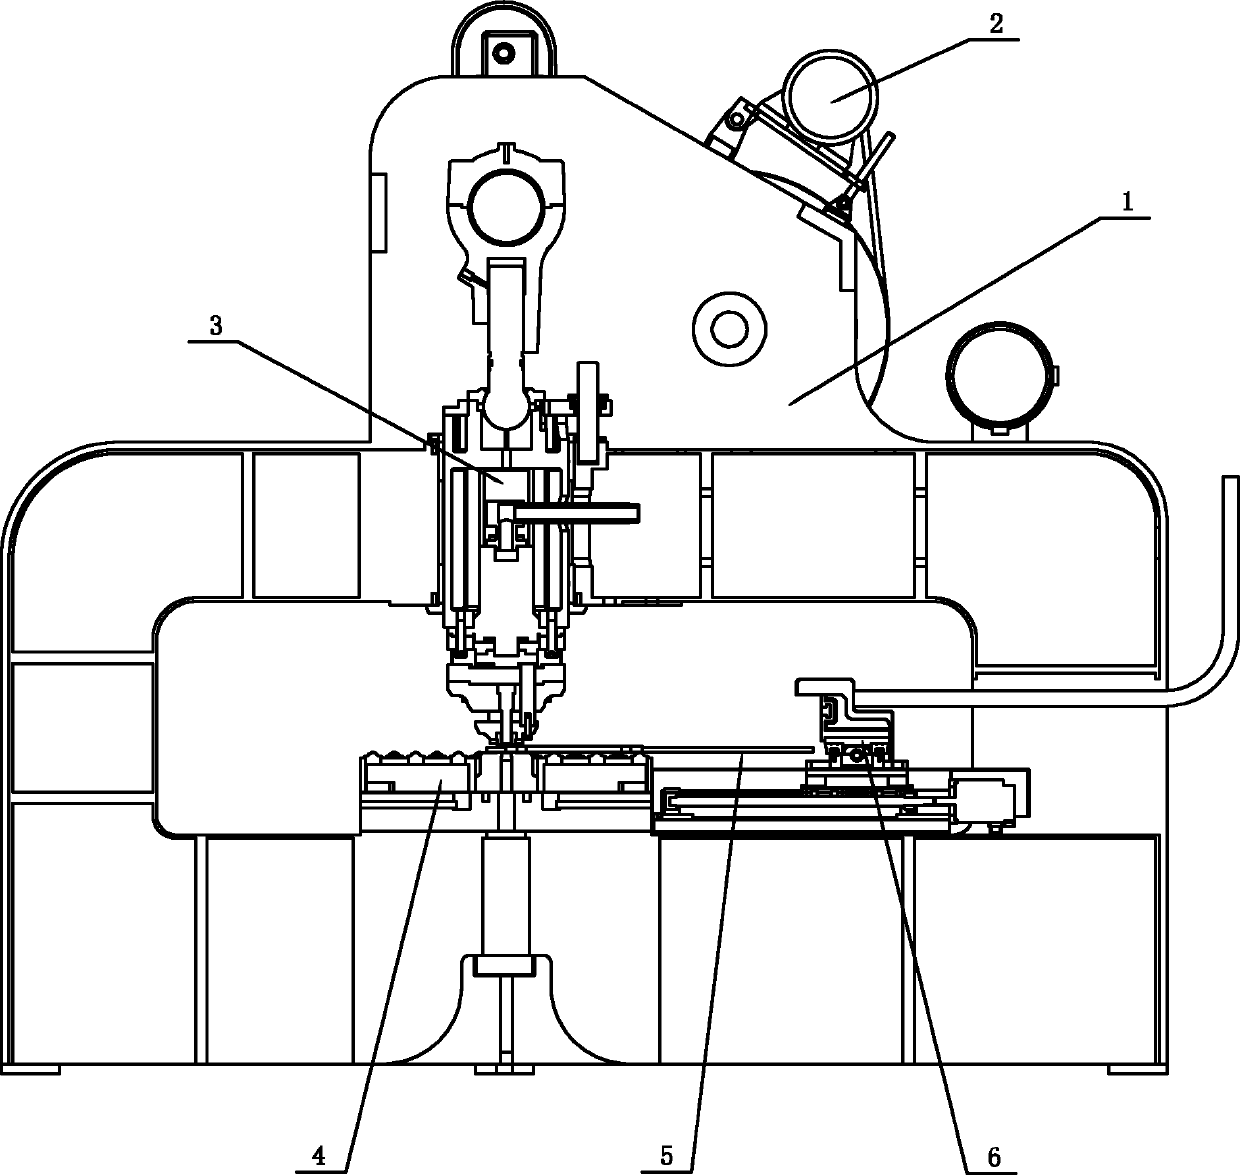 Feeding mechanism of computer numerical control (CNC) punching machine tool